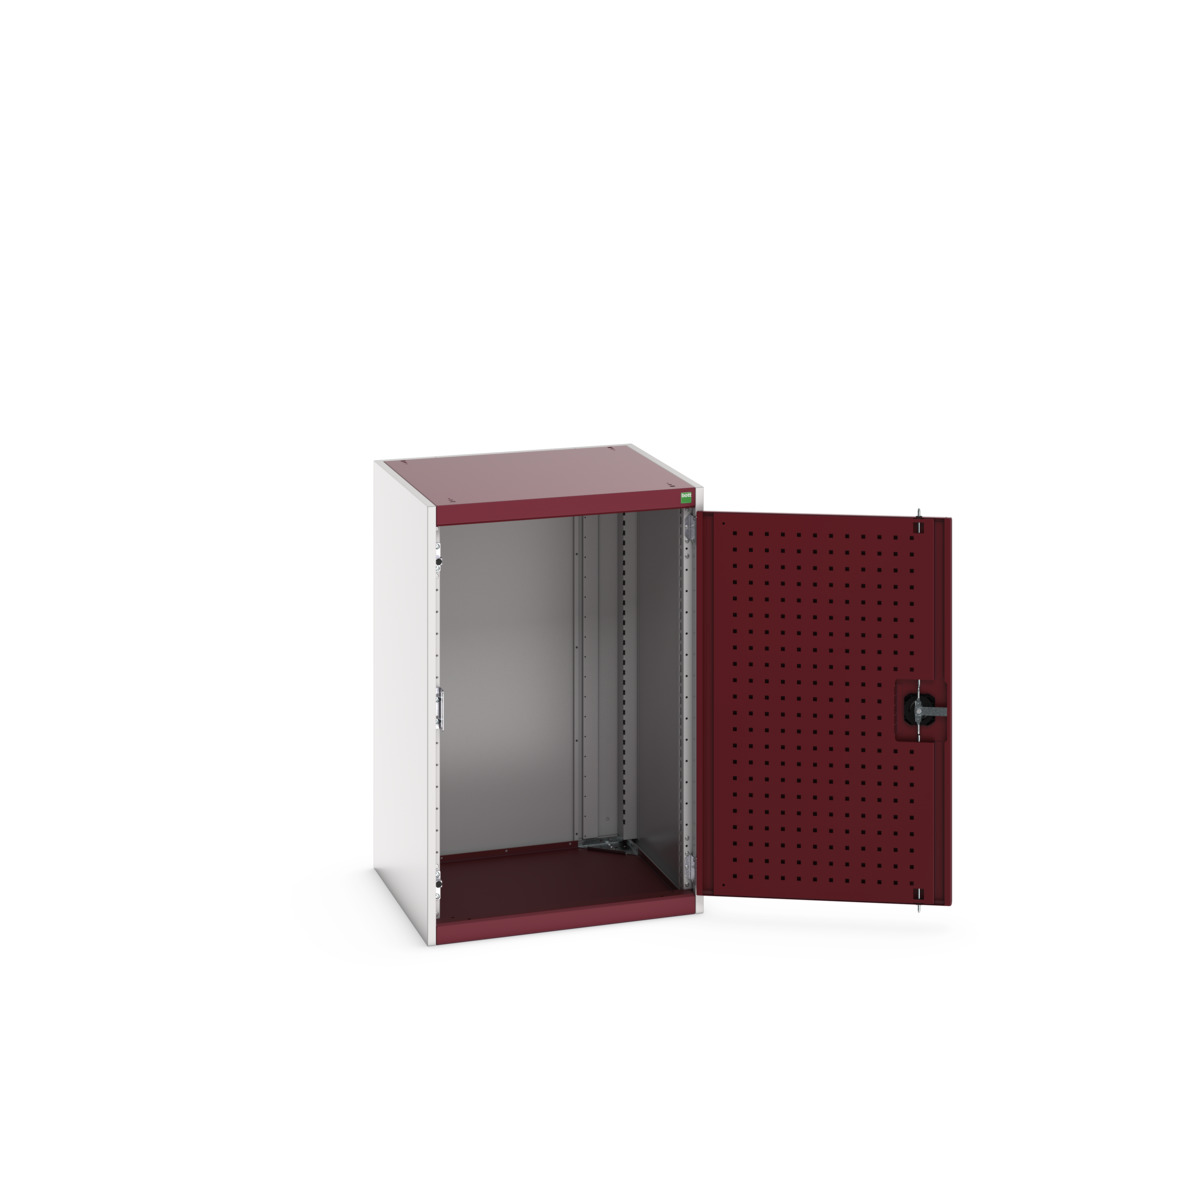 40019089.24V - cubio armoire SMLF-6610-1